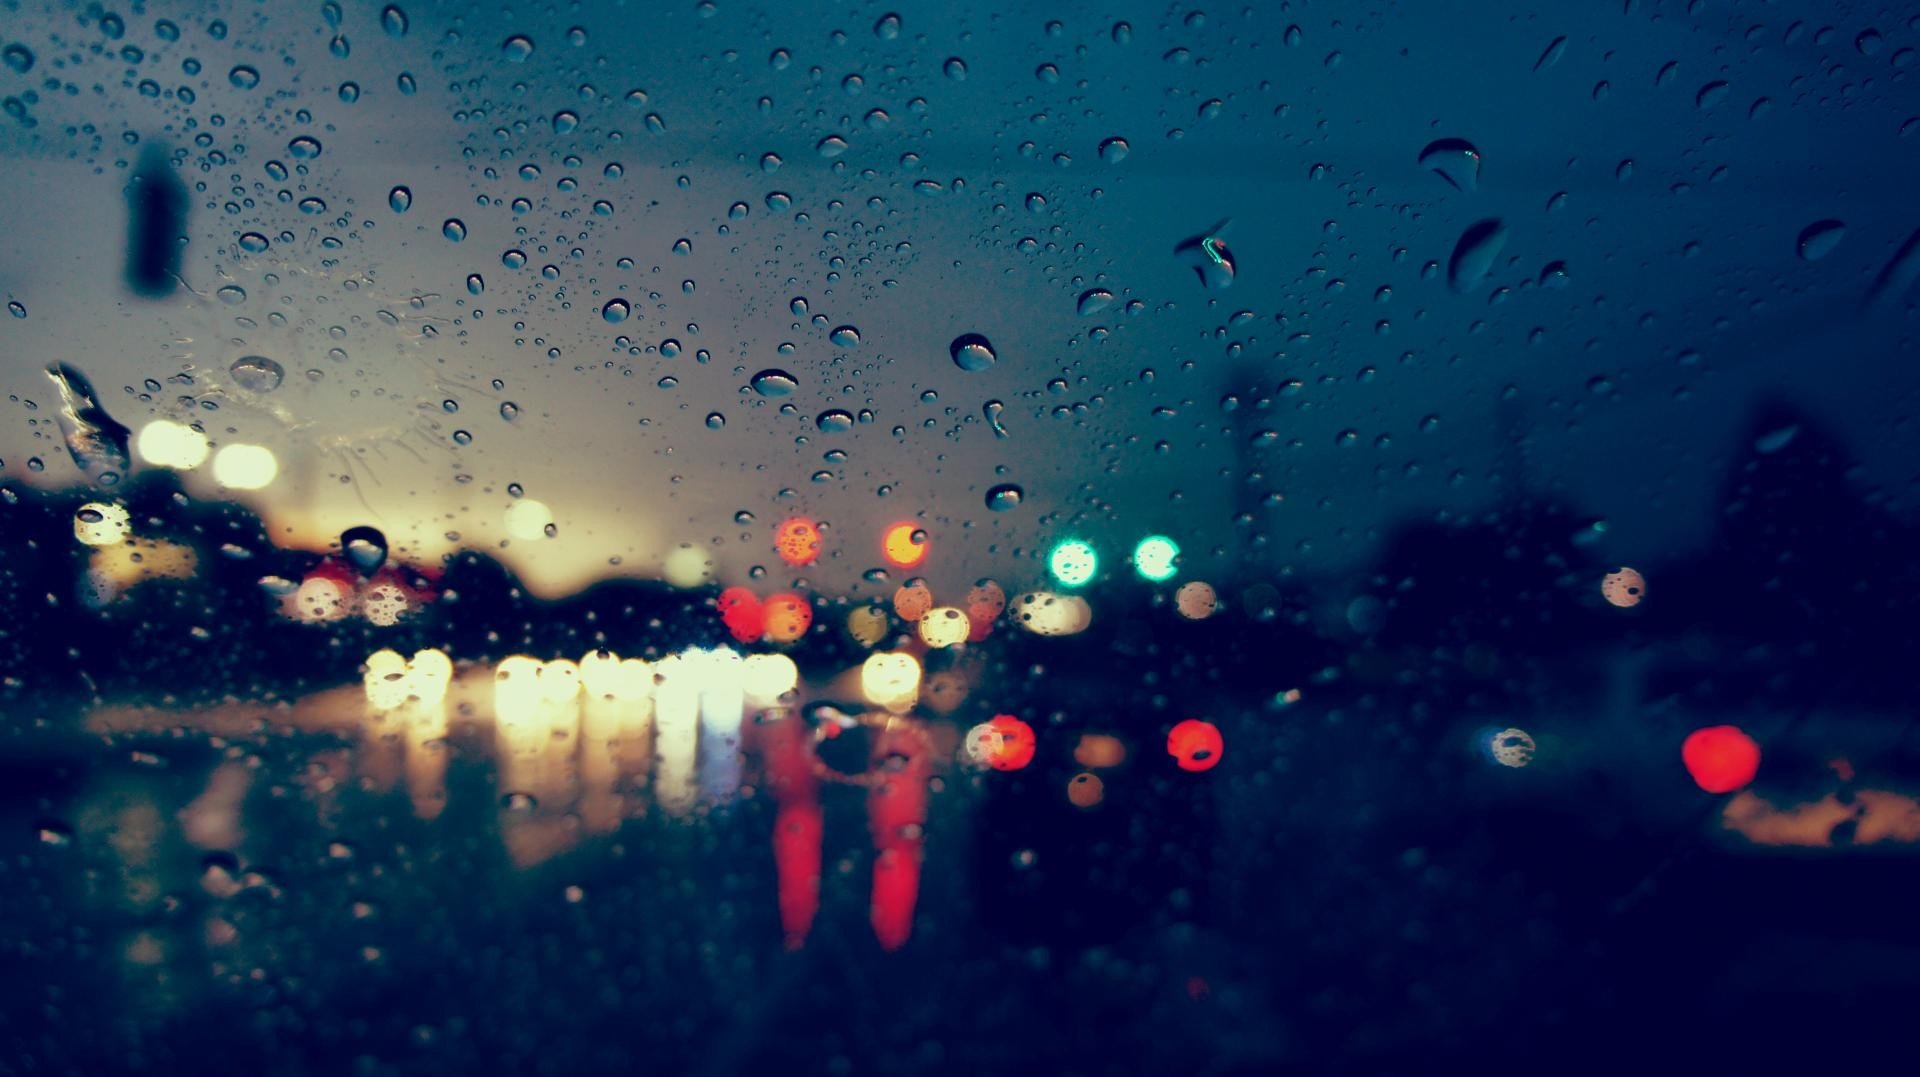 T me drop glass. Капли дождя. Дождь фон. Картинки на рабочий стол дождь. Дождливый фон.